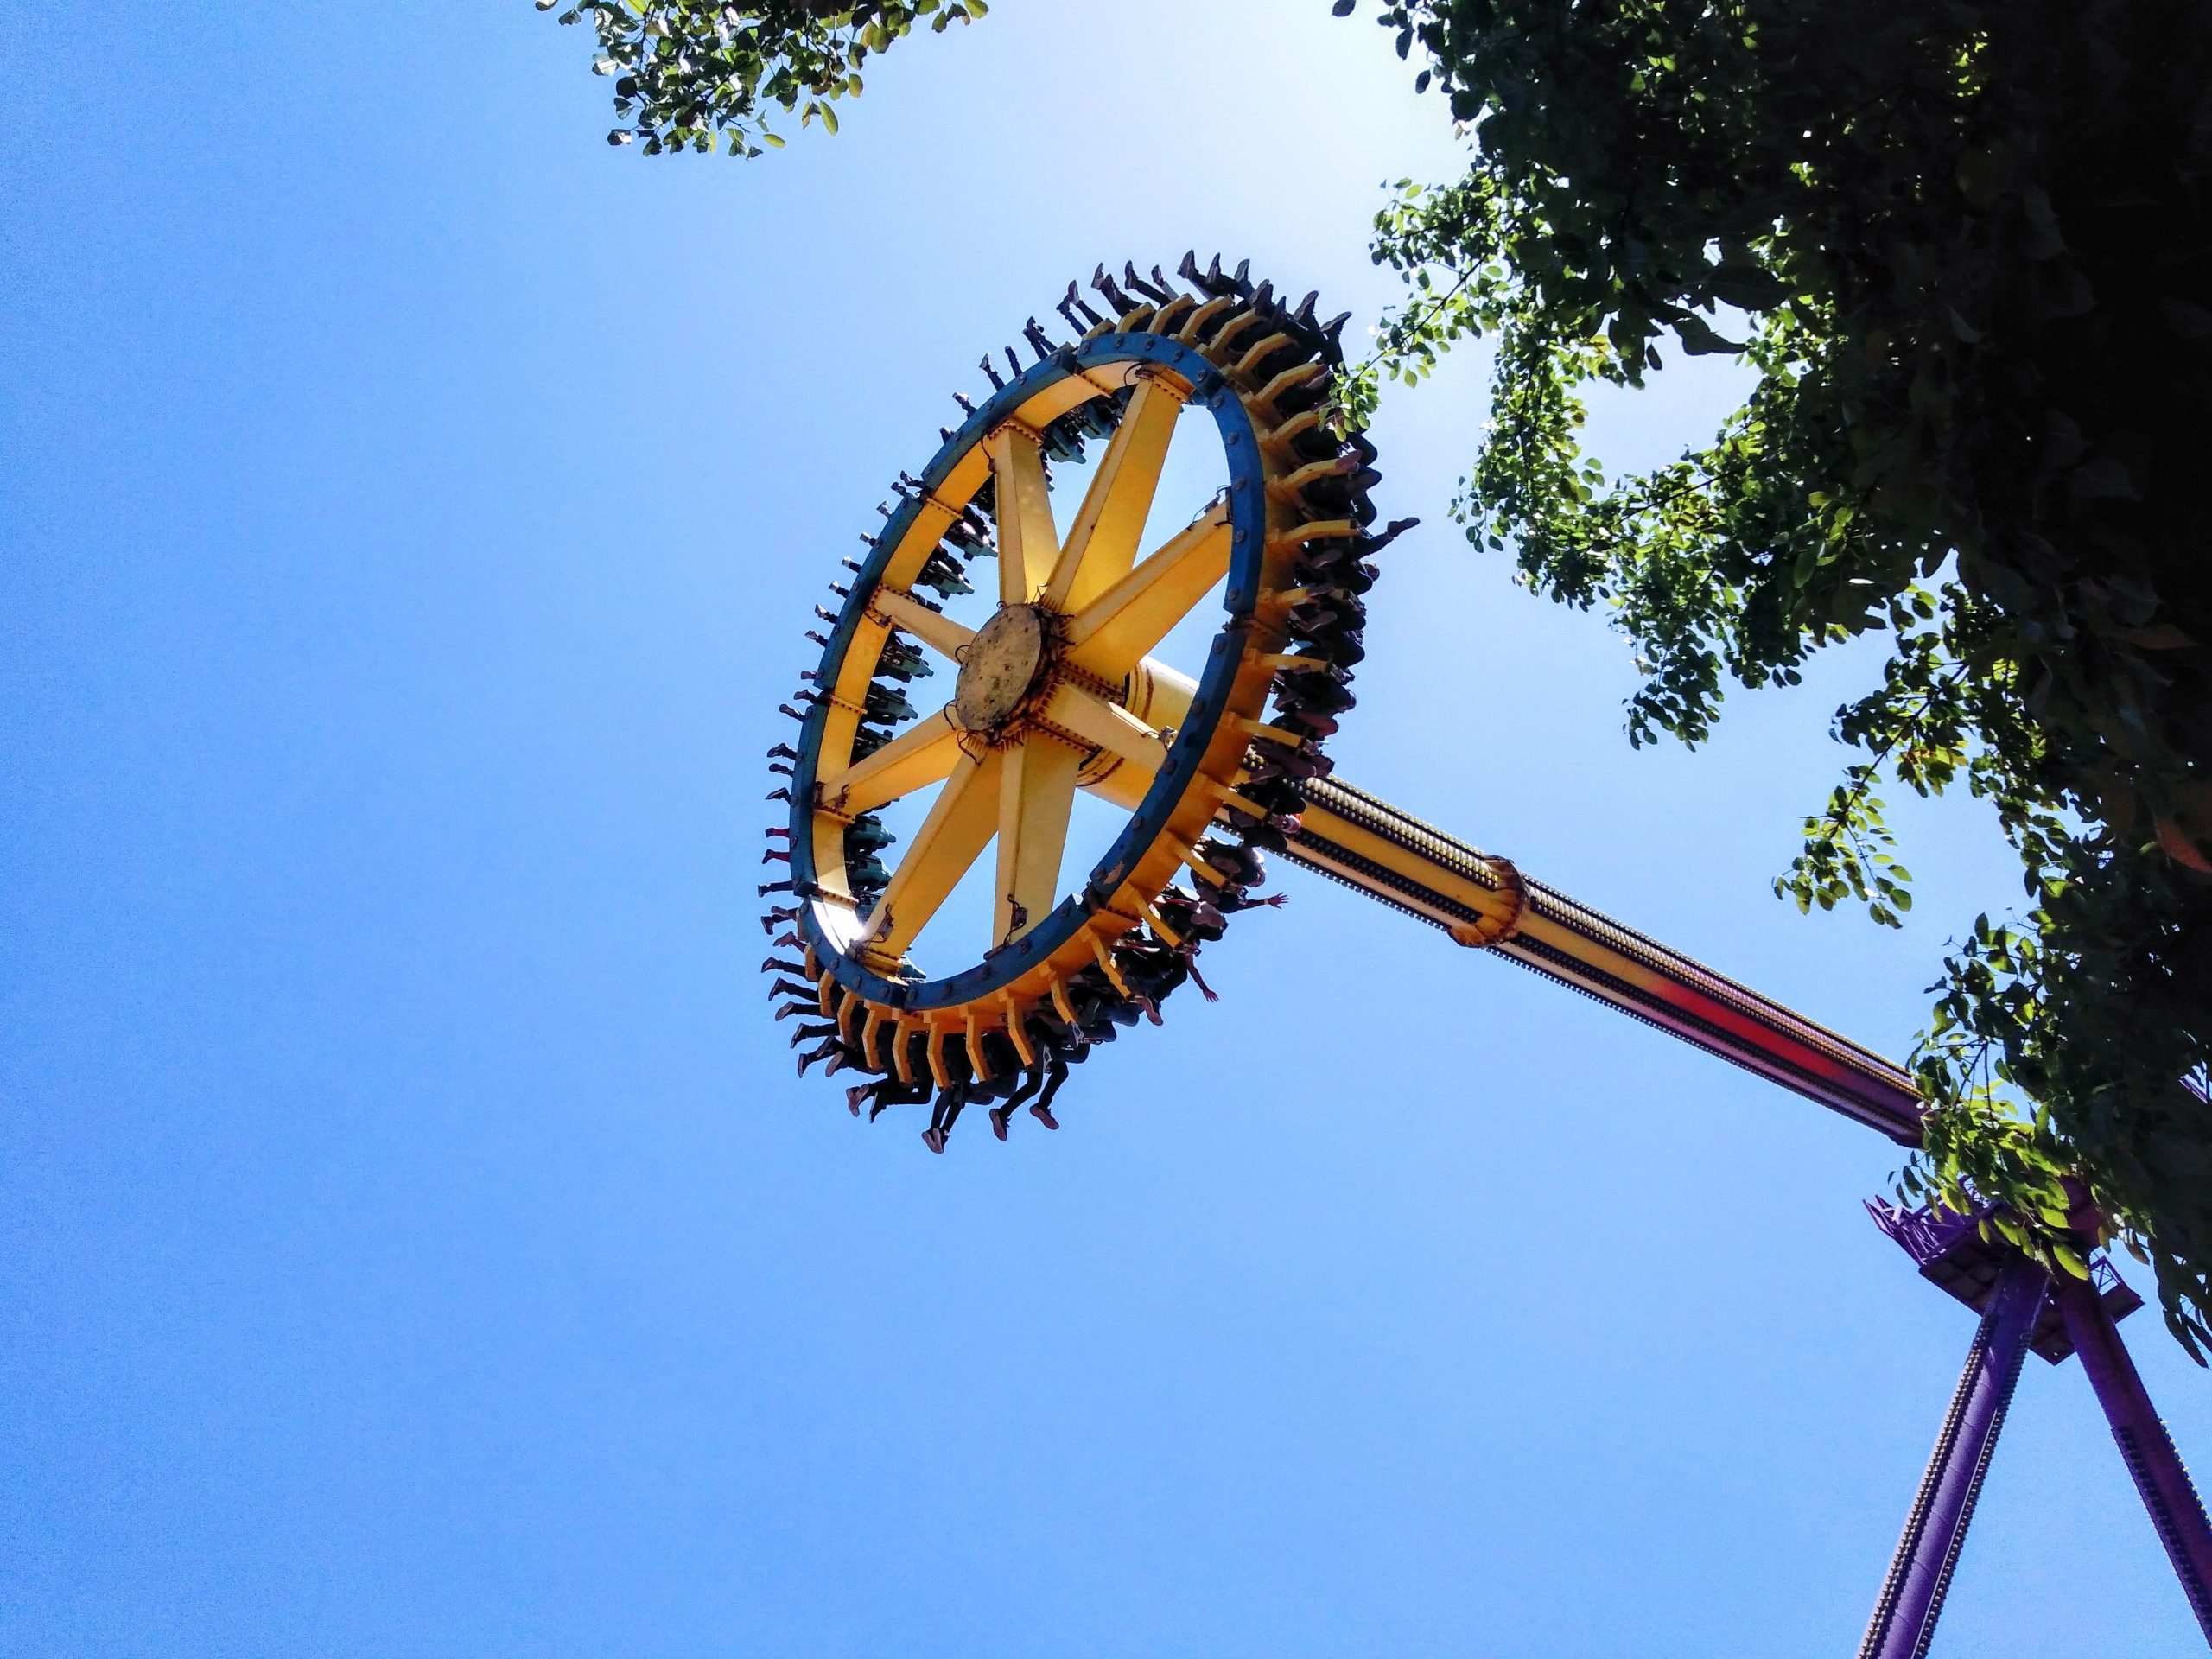 Big swing pendulum in an amusement Park